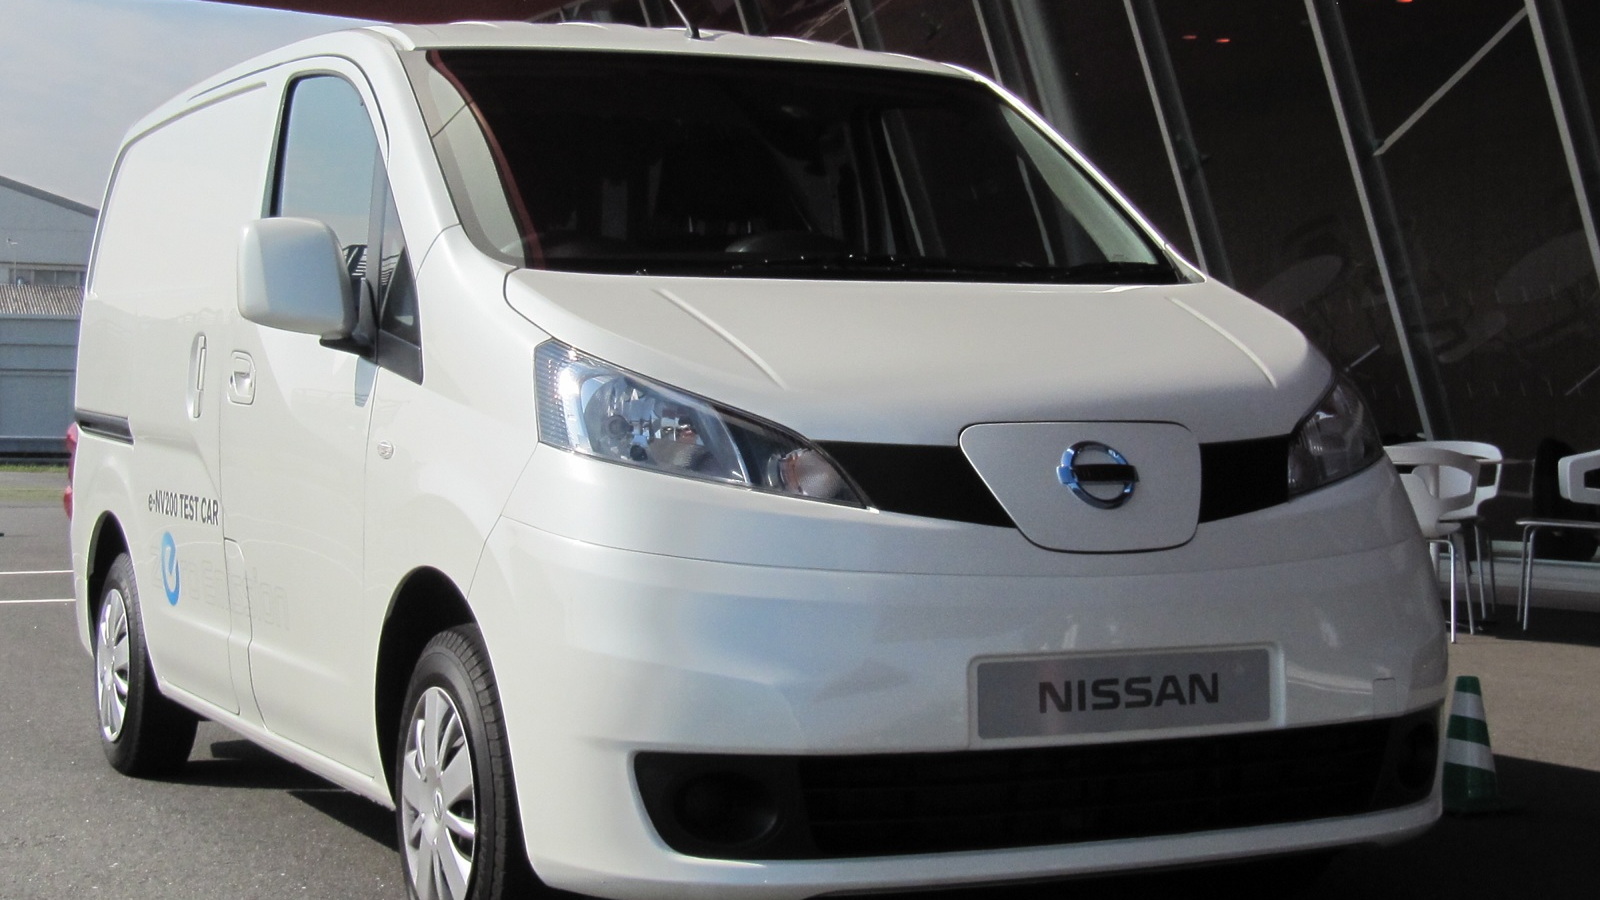 Nissan e-NV200 electric van prototype, Oppama, Japan, Oct 2012